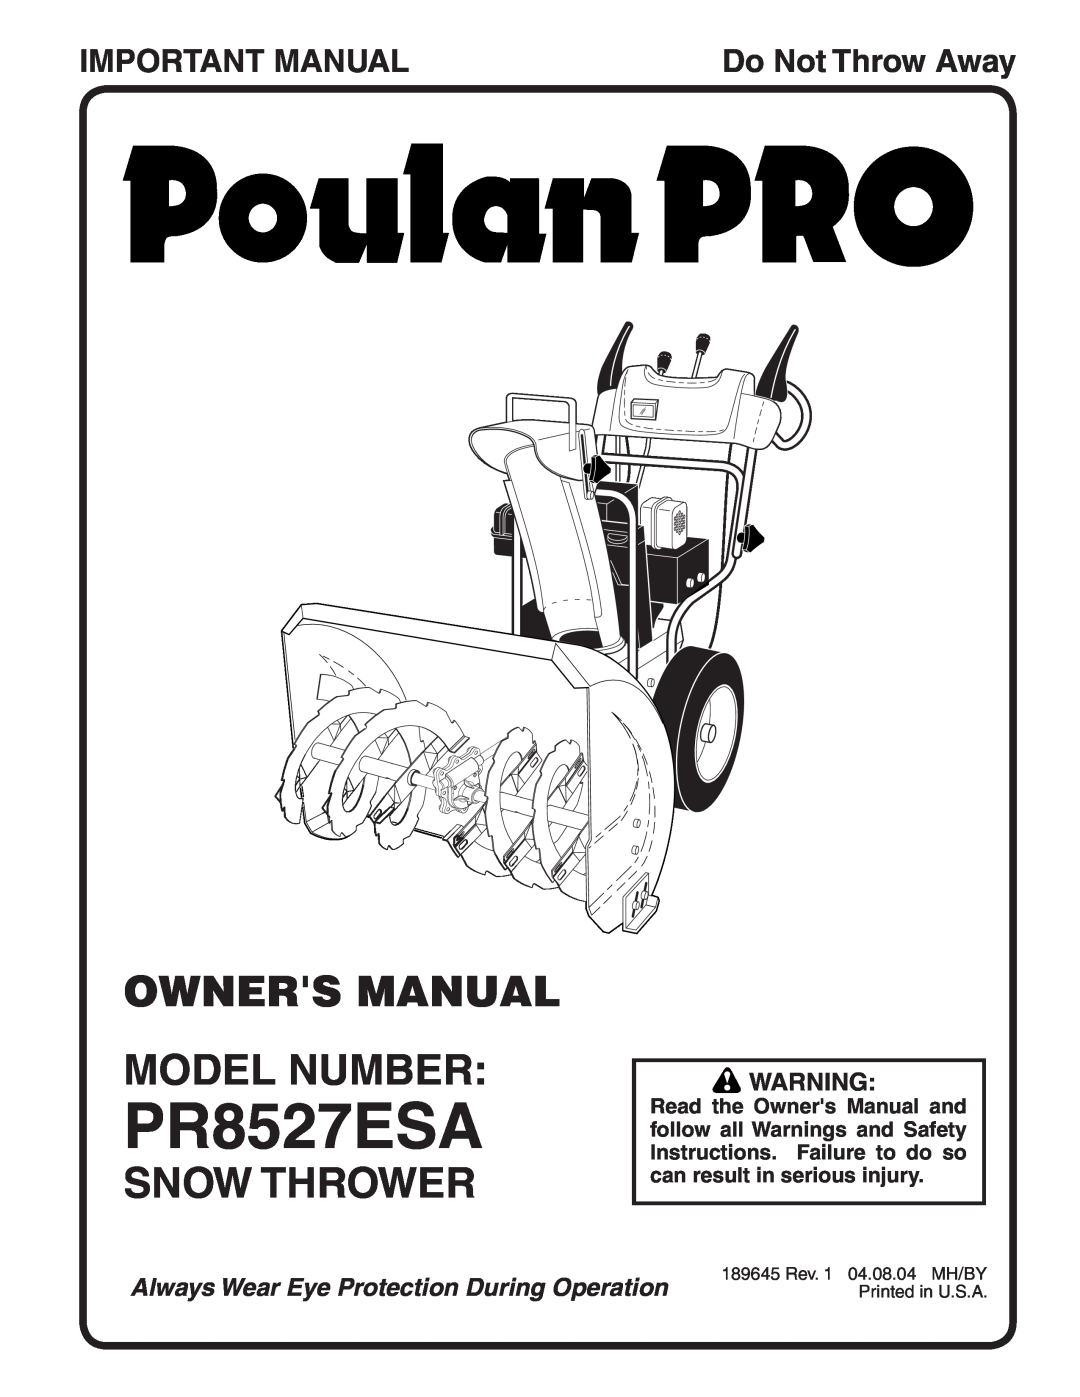 Poulan 189645 owner manual Snow Thrower, Important Manual, PR8527ESA, Do Not Throw Away 